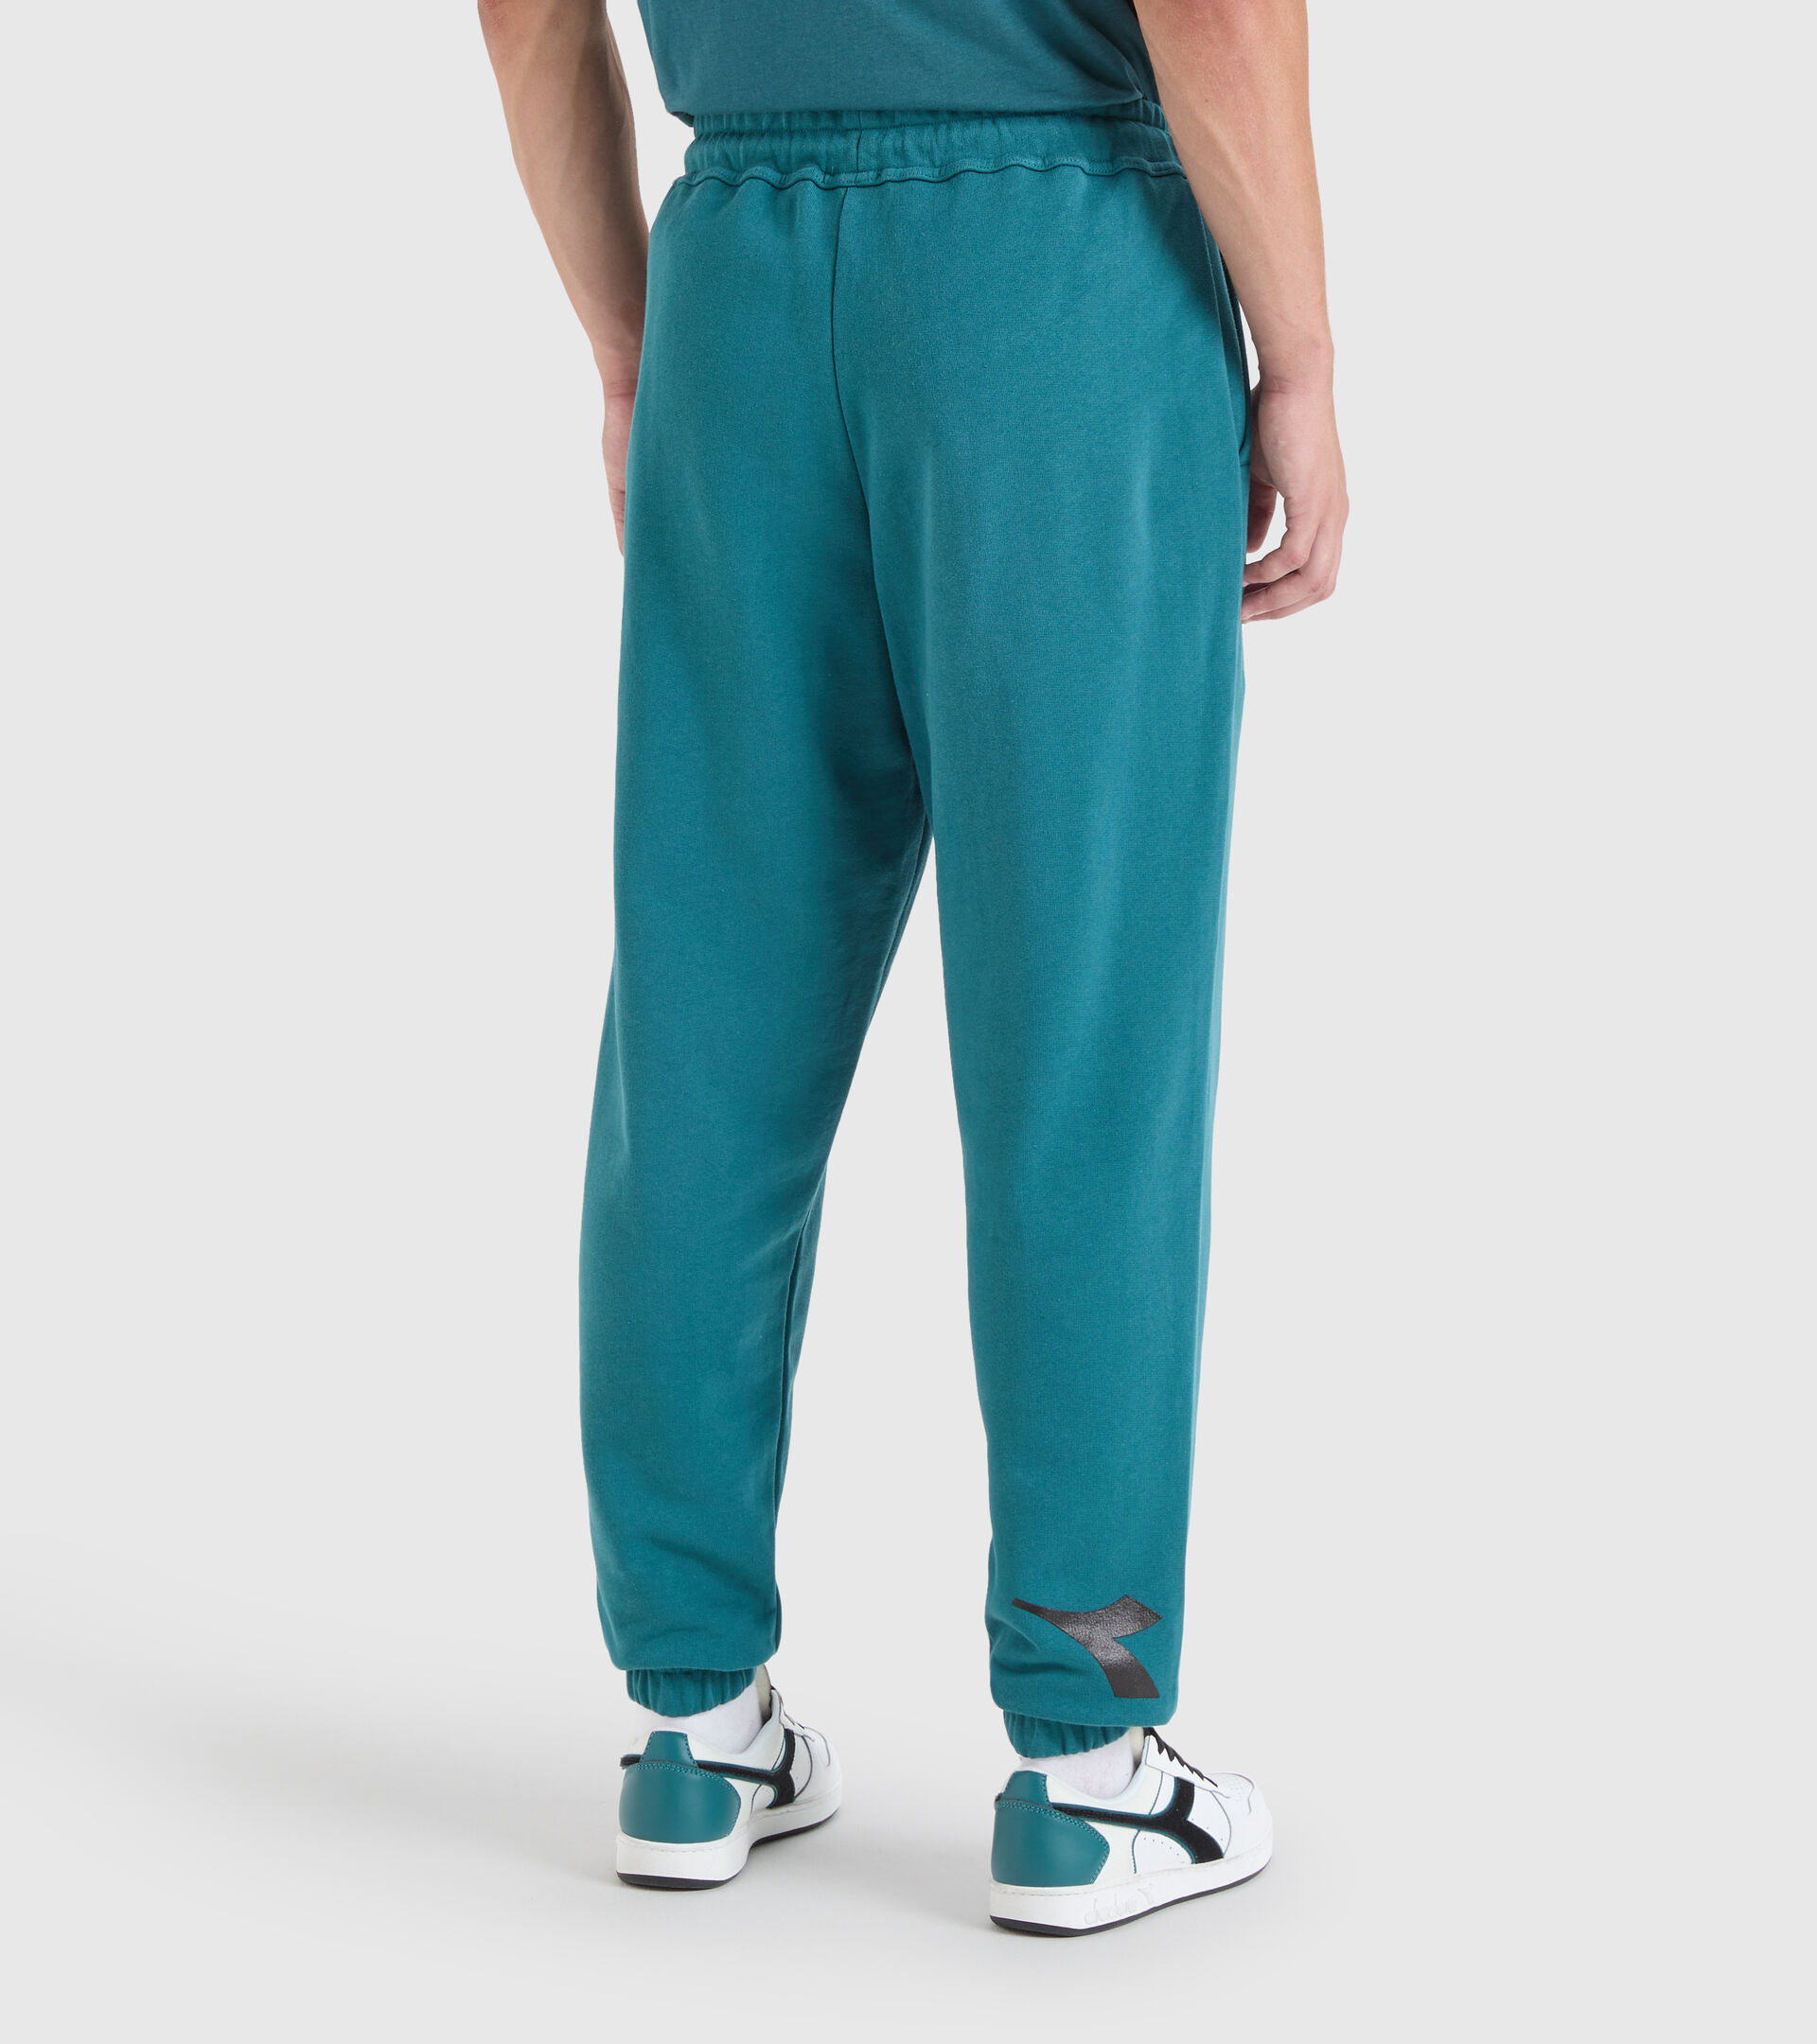 Cotton sports trousers - Unisex PANT MANIFESTO BLUE PACIFIC - Diadora